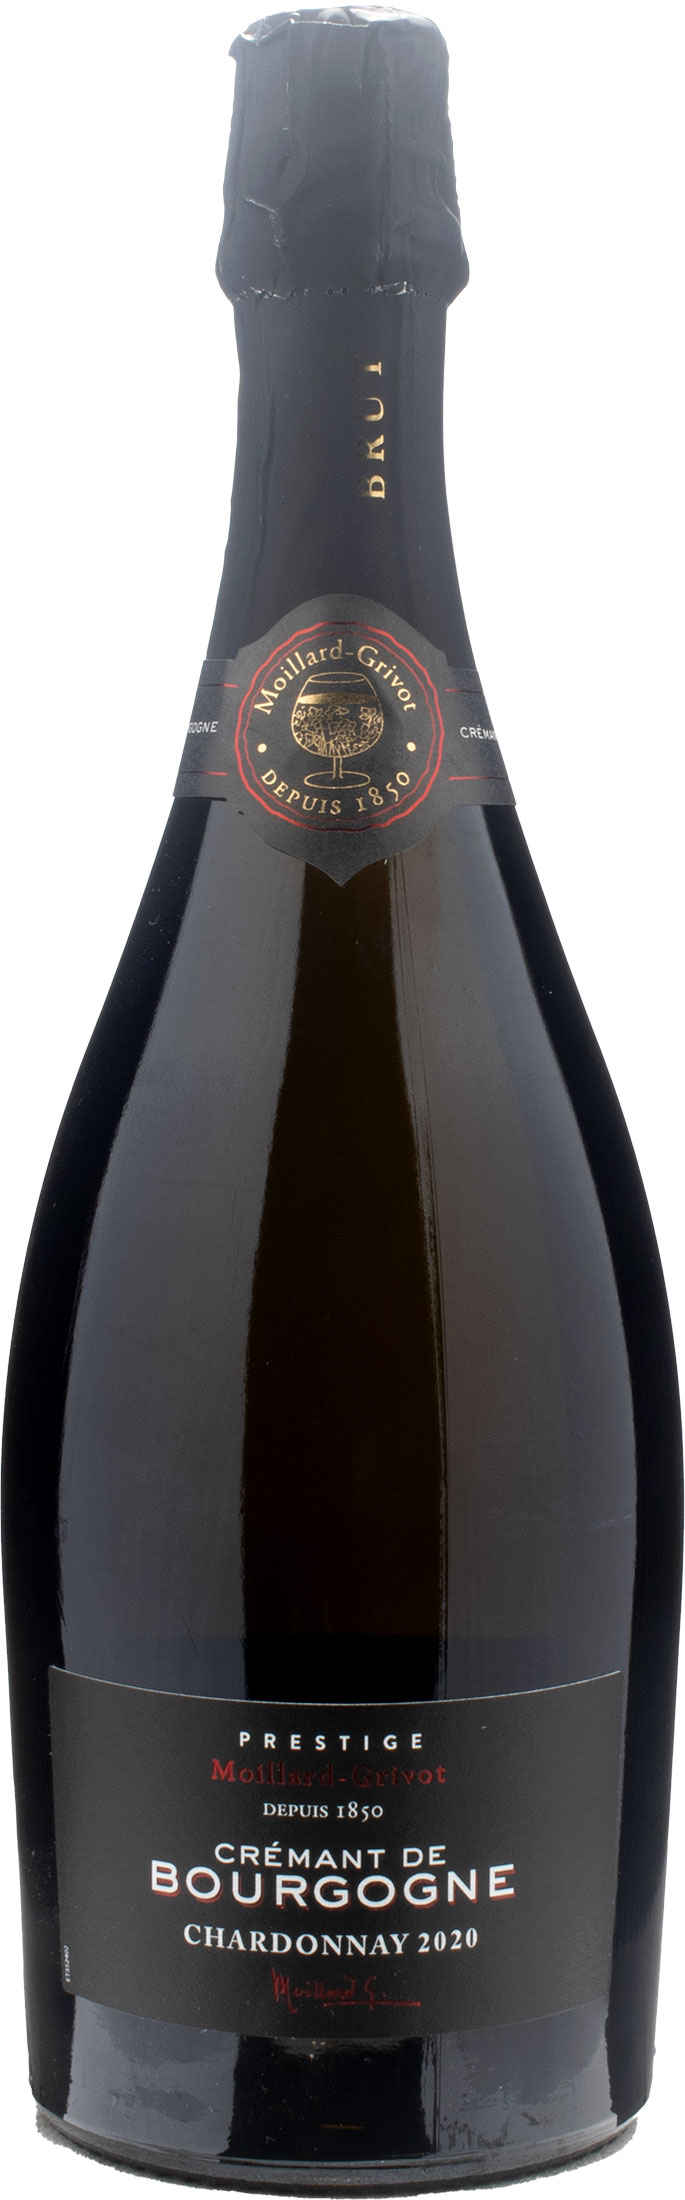 Moillard Grivot Crémant de Bourgogne Chardonnay Prestige Brut 2020